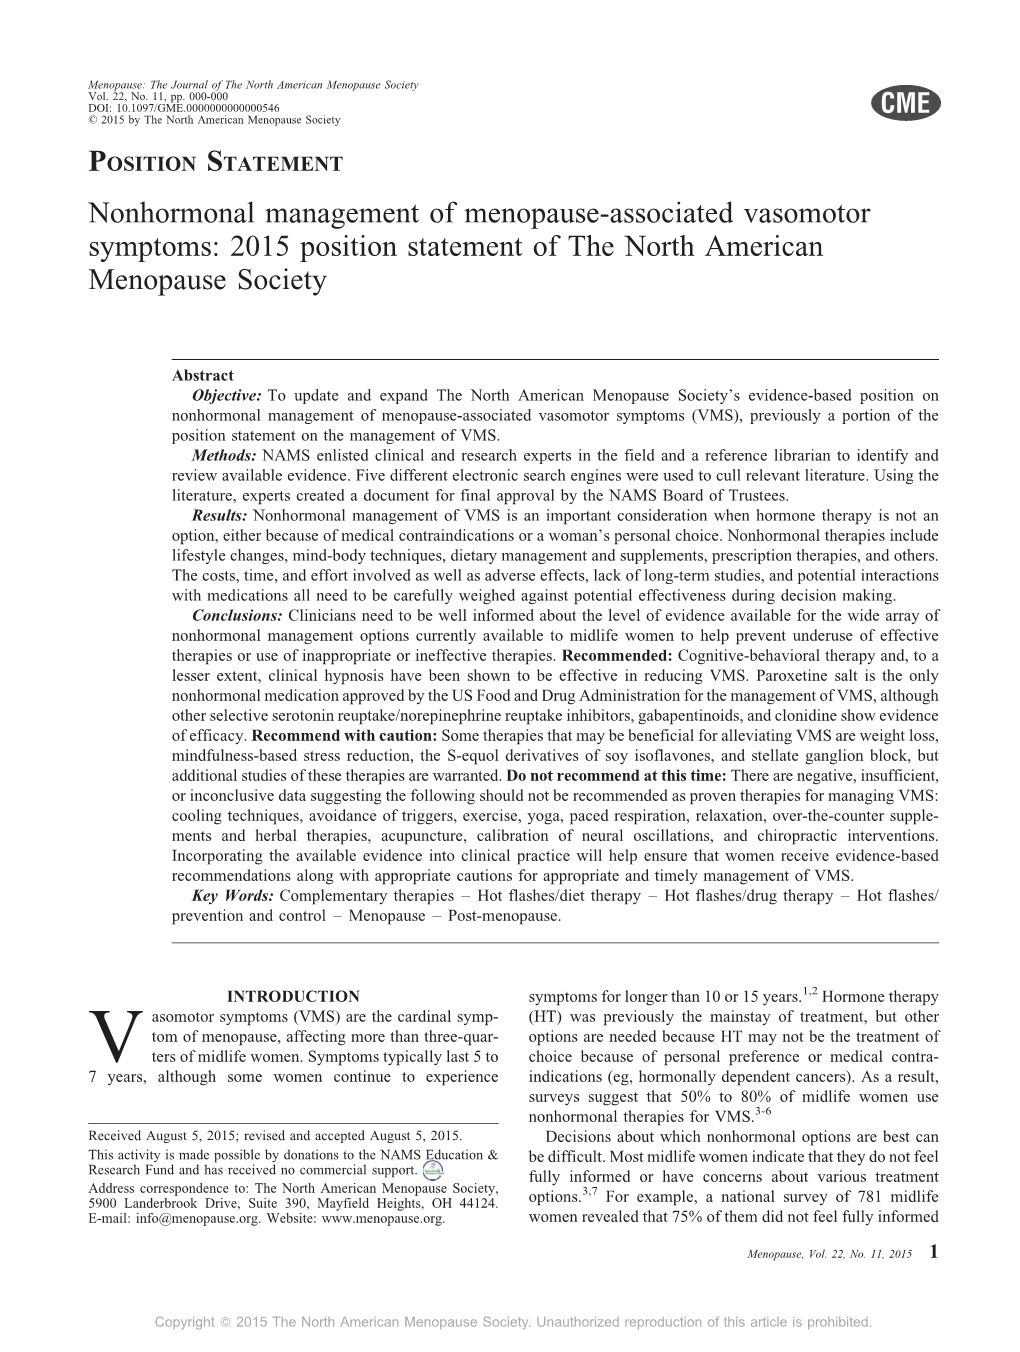 Nonhormonal Management of Menopause-Associated Vasomotor Symptoms: 2015 Position Statement of the North American Menopause Society